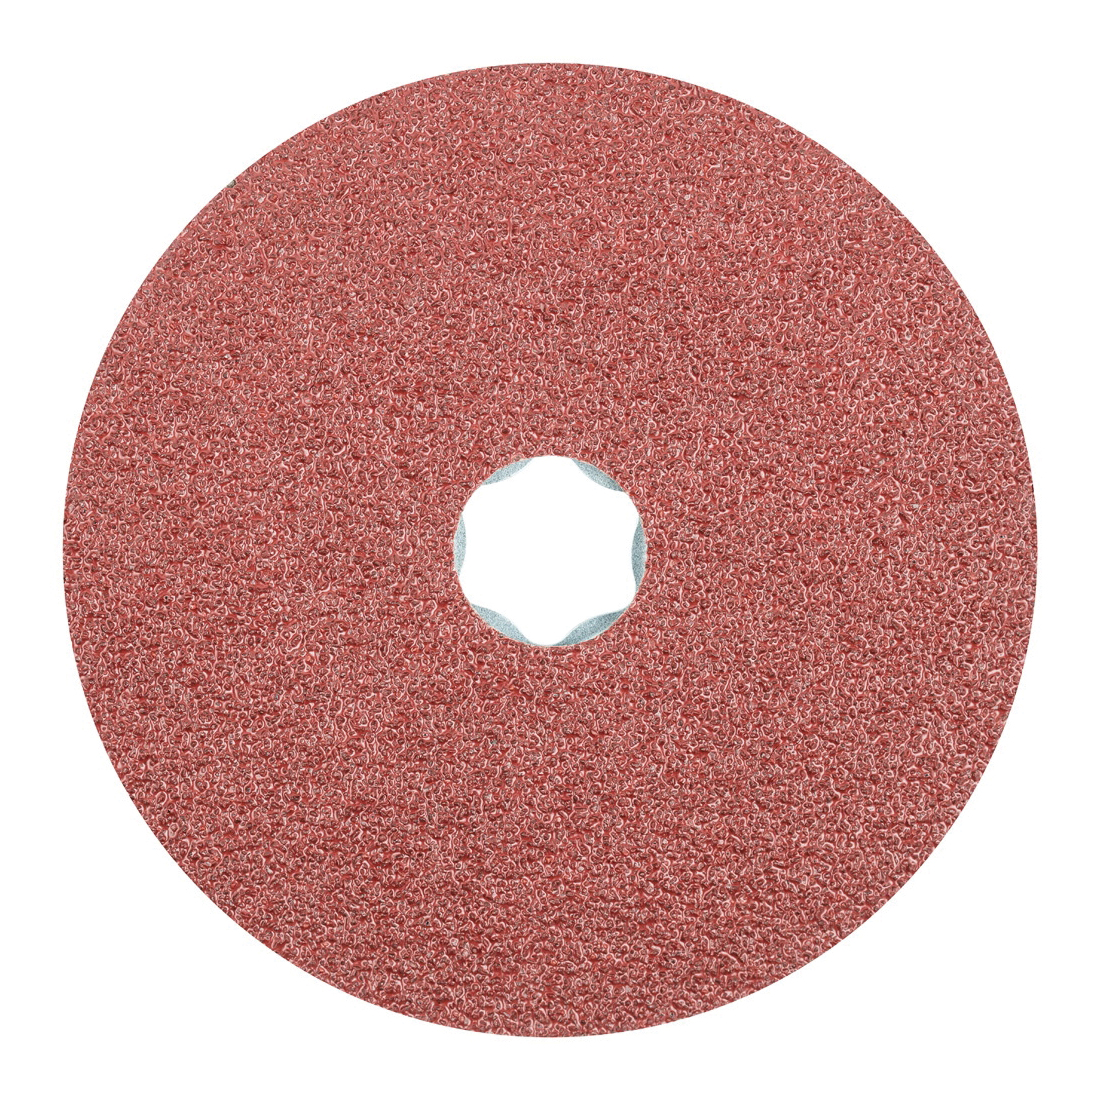 PFERD COMBICLICK® 40092 Coated Abrasive Disc, 4-1/2 in Dia, 36 Grit, Aluminum Oxide Abrasive